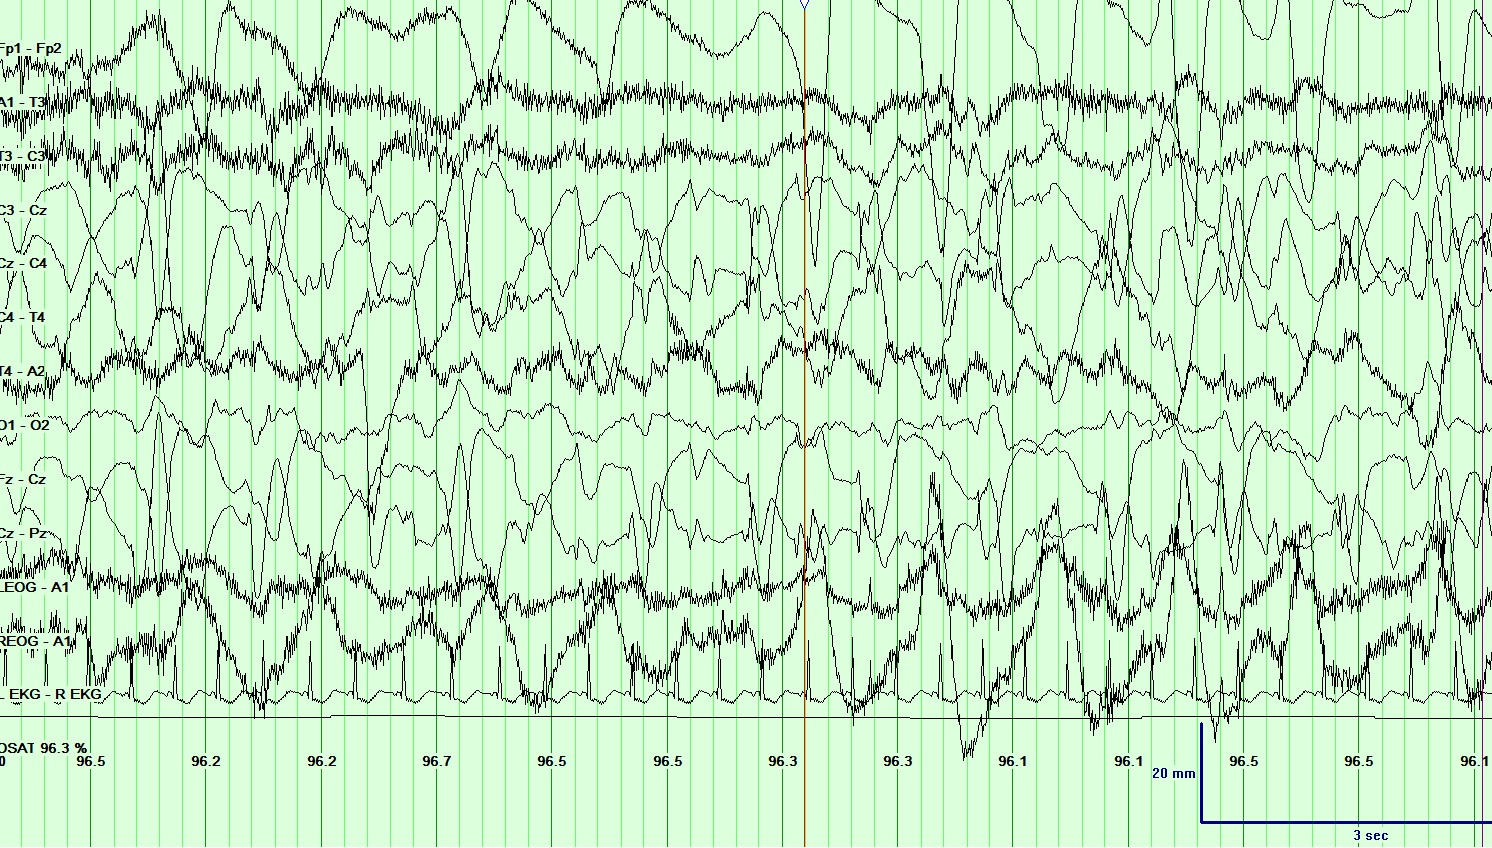 <p>Electroencephalogram (EEG), Neonatal Seizure. This EEG is characteristic of a neonatal seizure.</p>